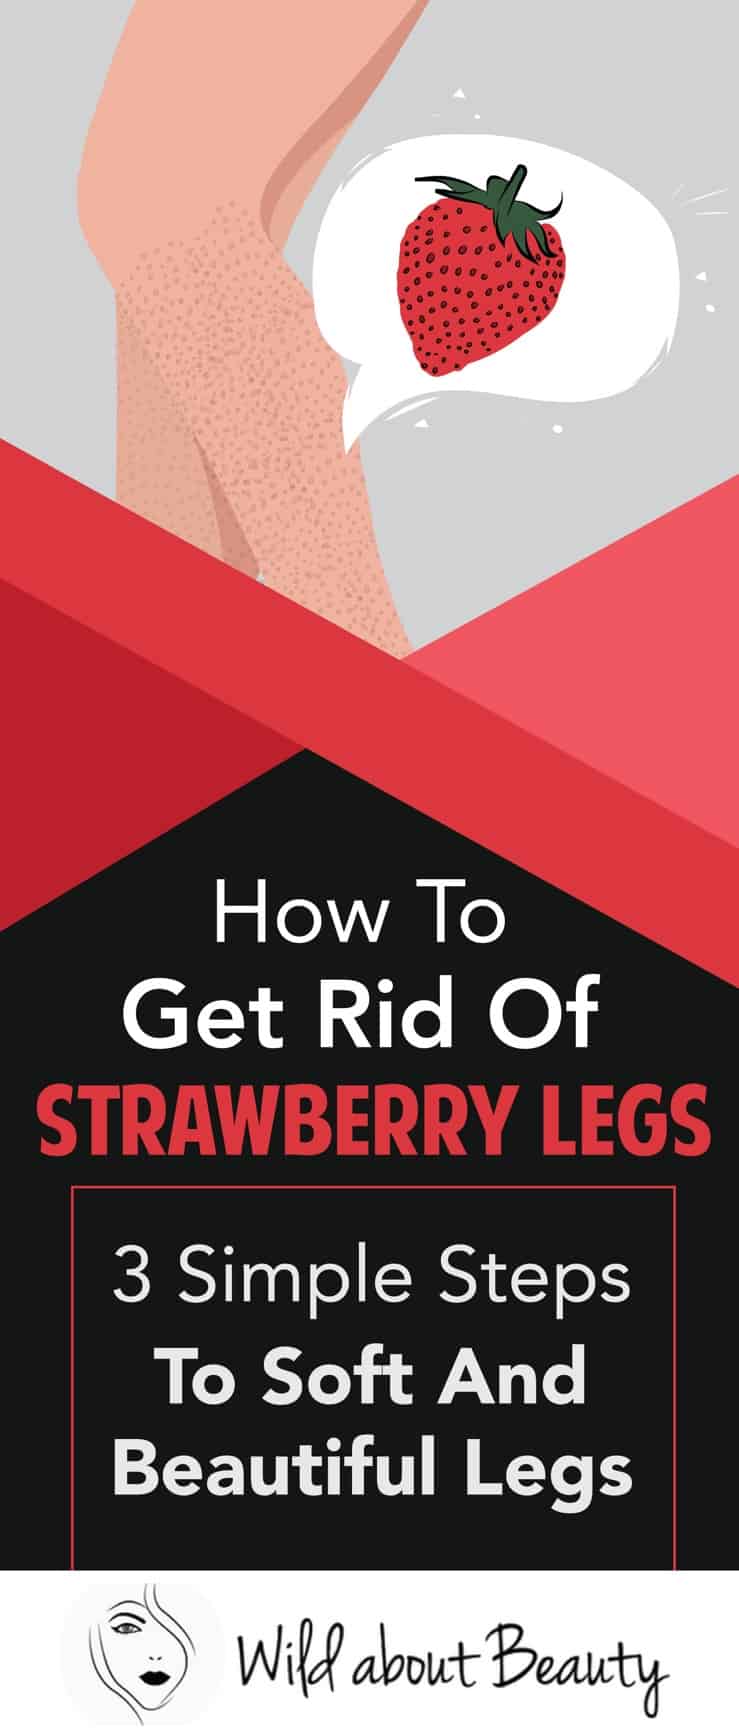 Strawberry legs